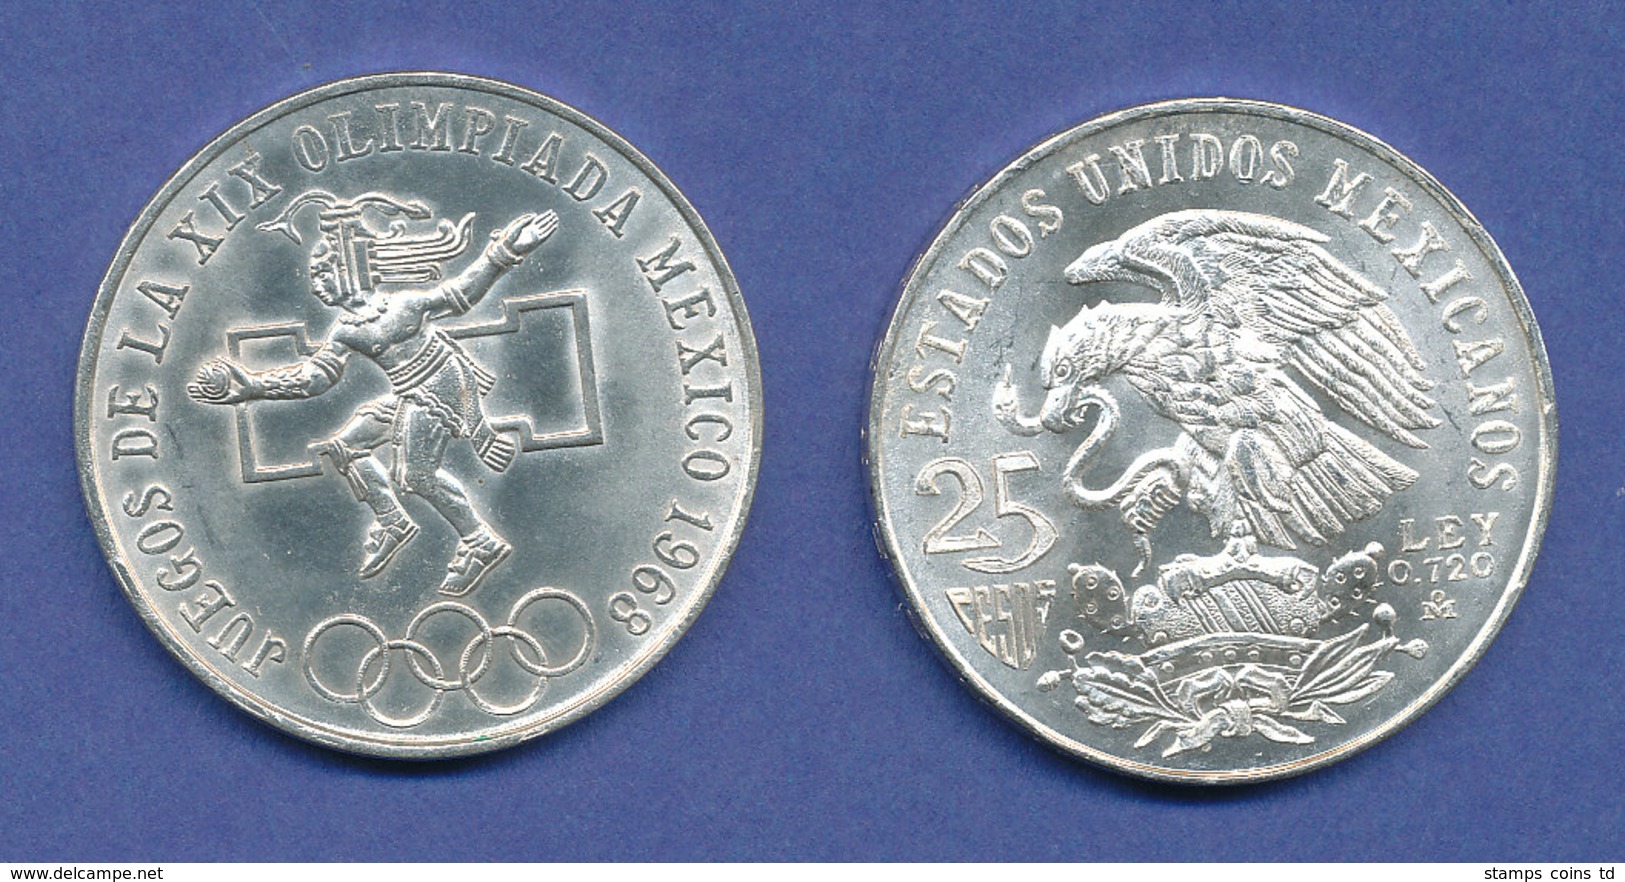 Mexiko Silber-Münze Olympische Spiele Mexico-City 1968, 22,5g 720er Silber - Mexiko